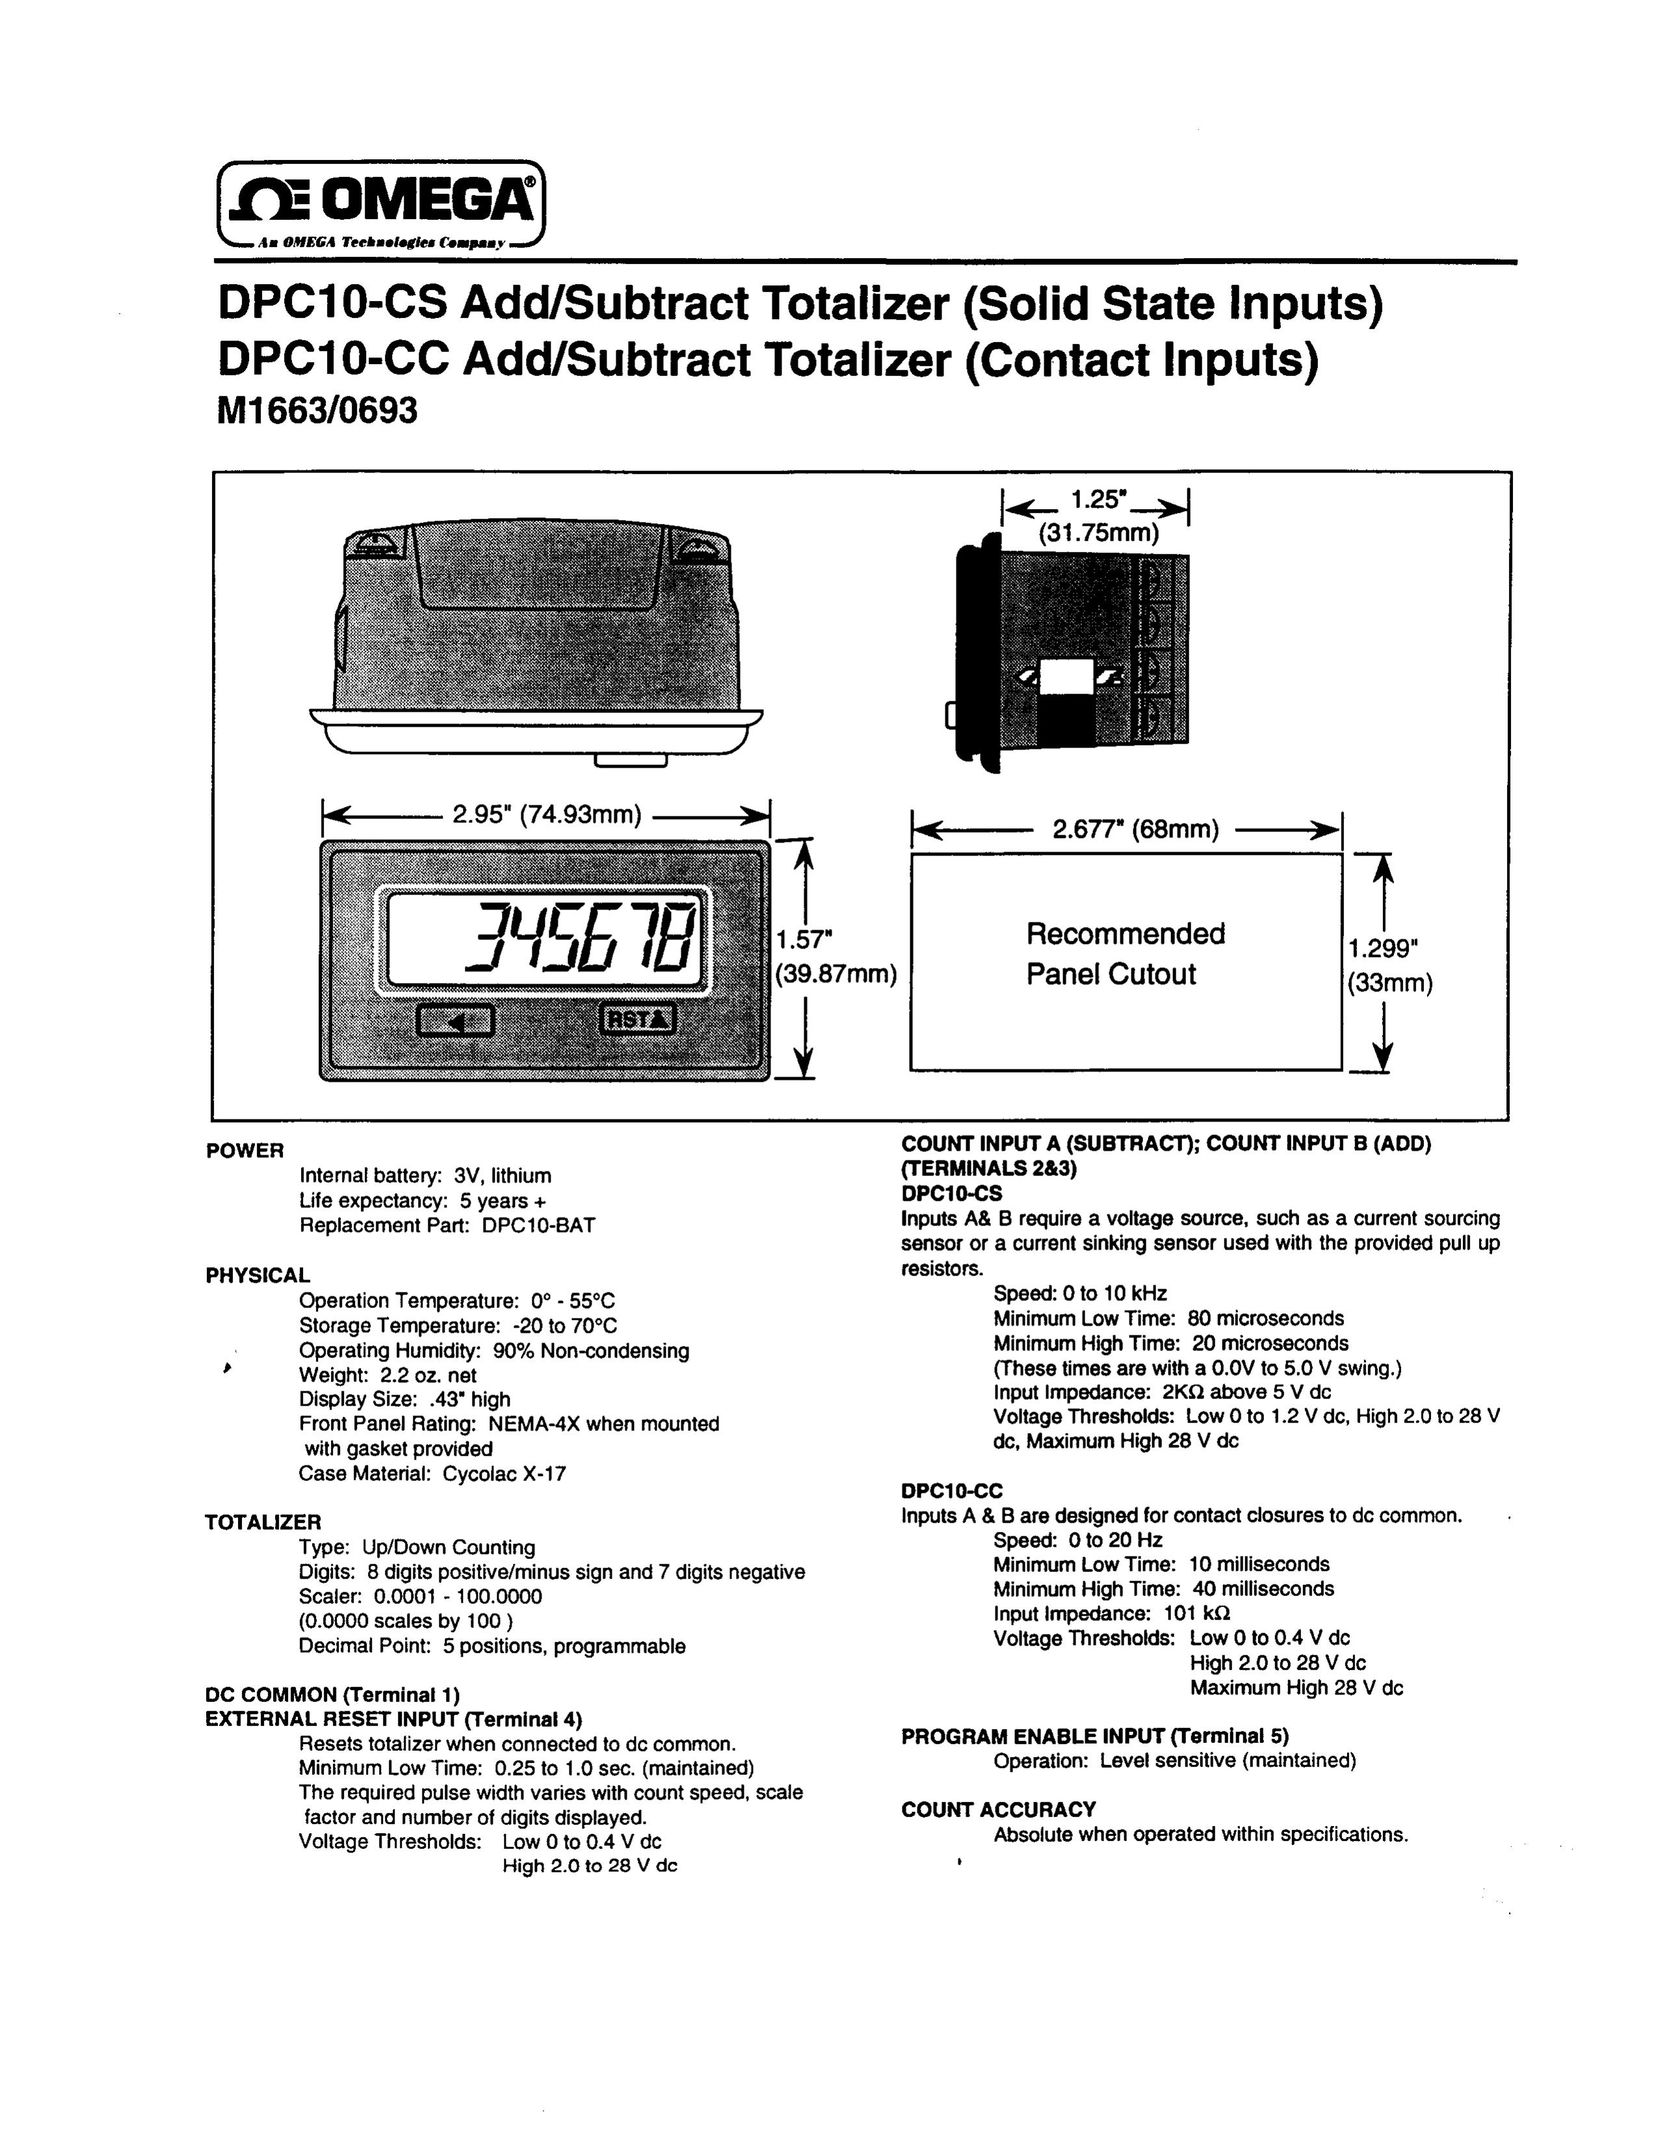 Omega Vehicle Security DPC10-CS Calculator User Manual